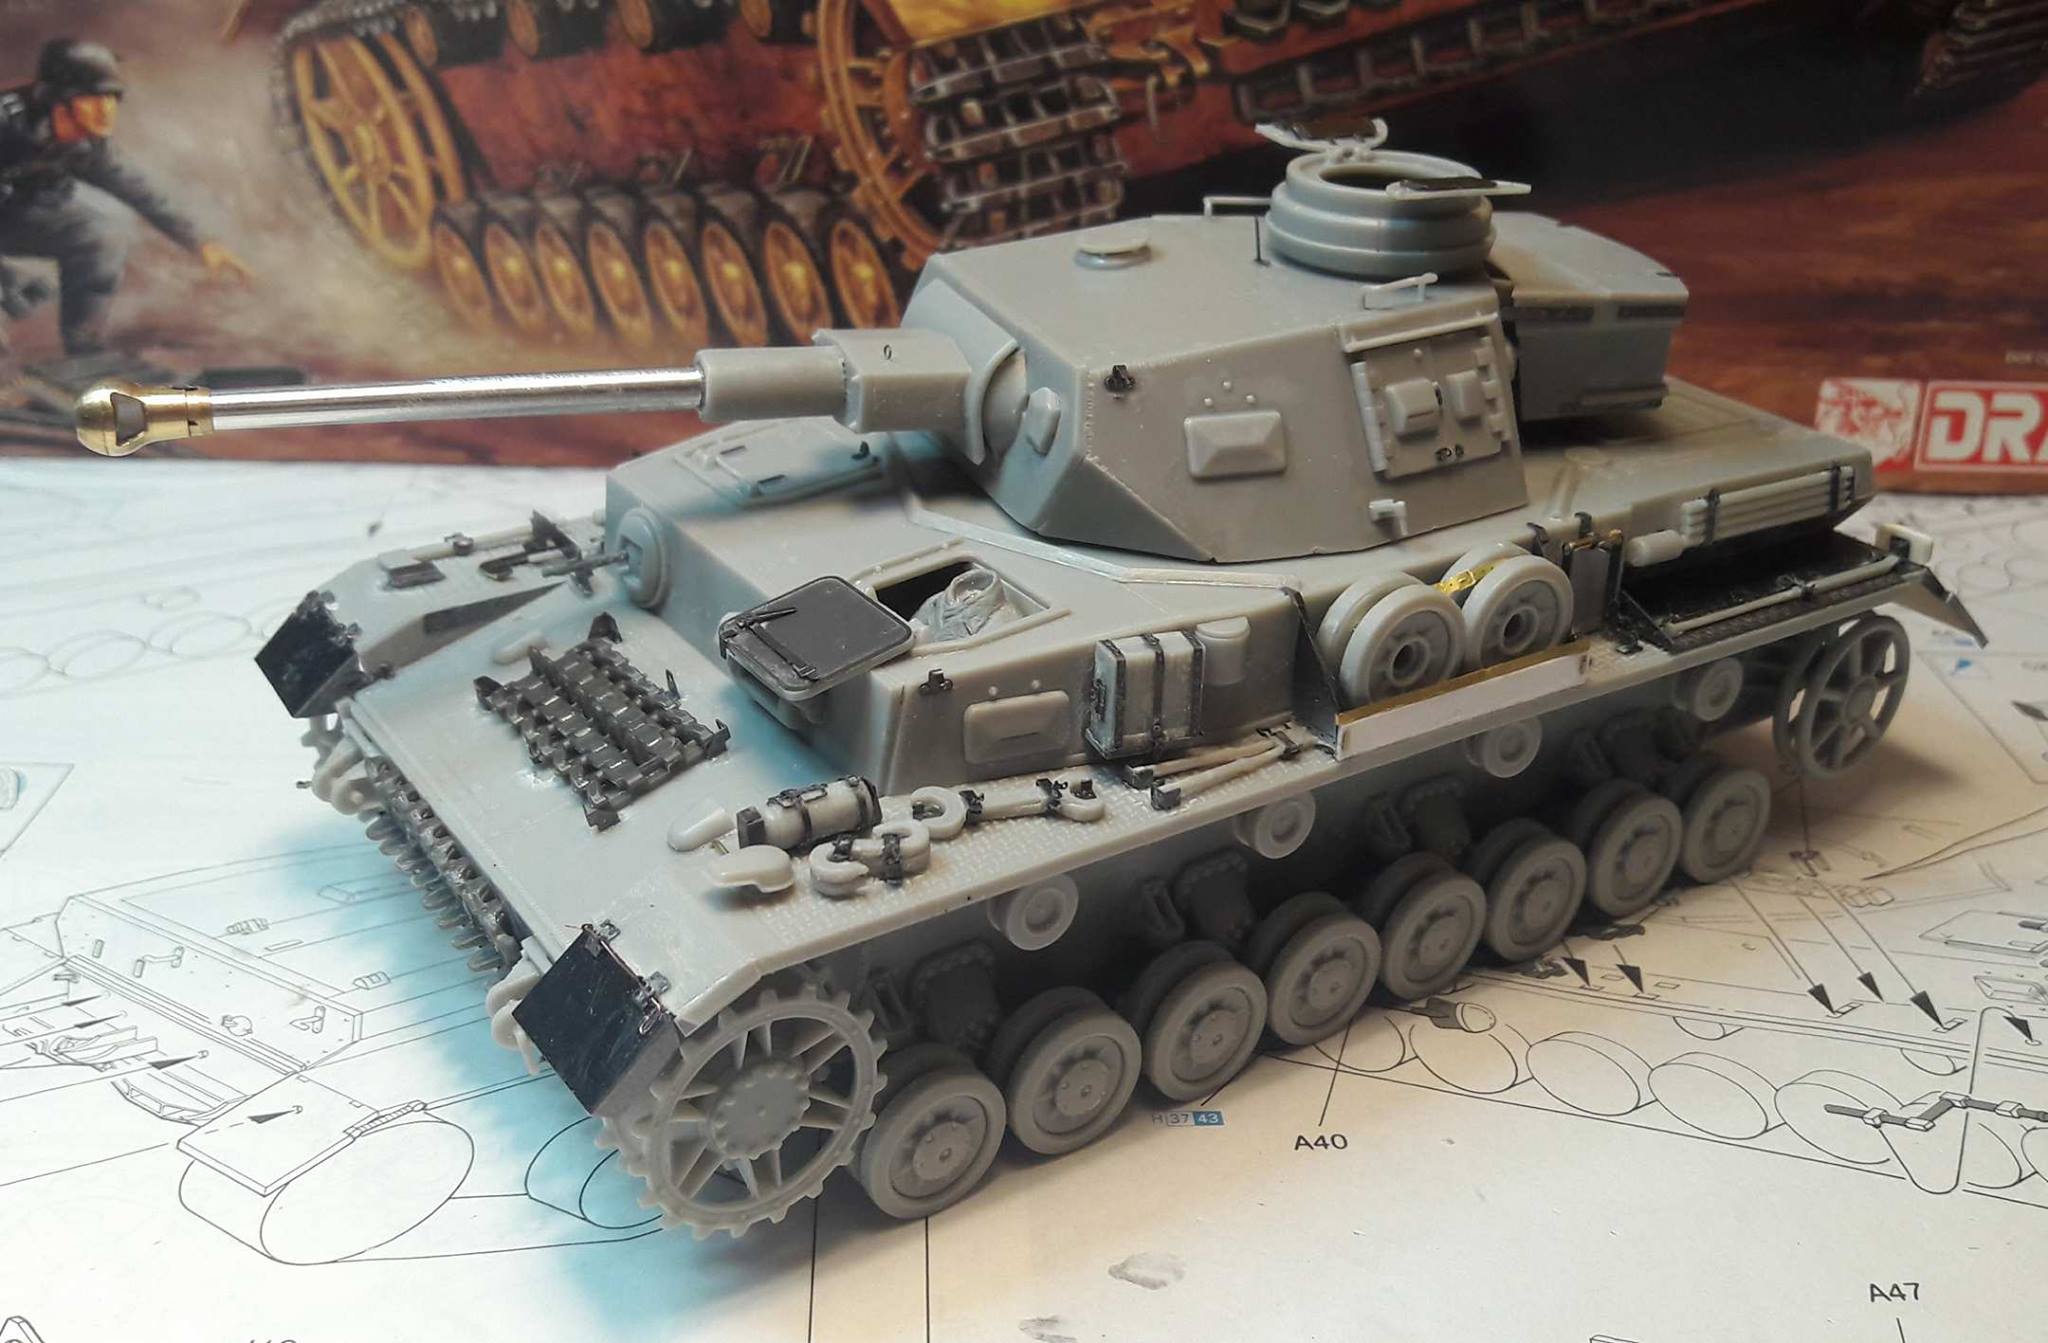 PzKpfw. IV Ausf. F2 - Dragon - Page 2 9091642119100610212191410034995399200348o